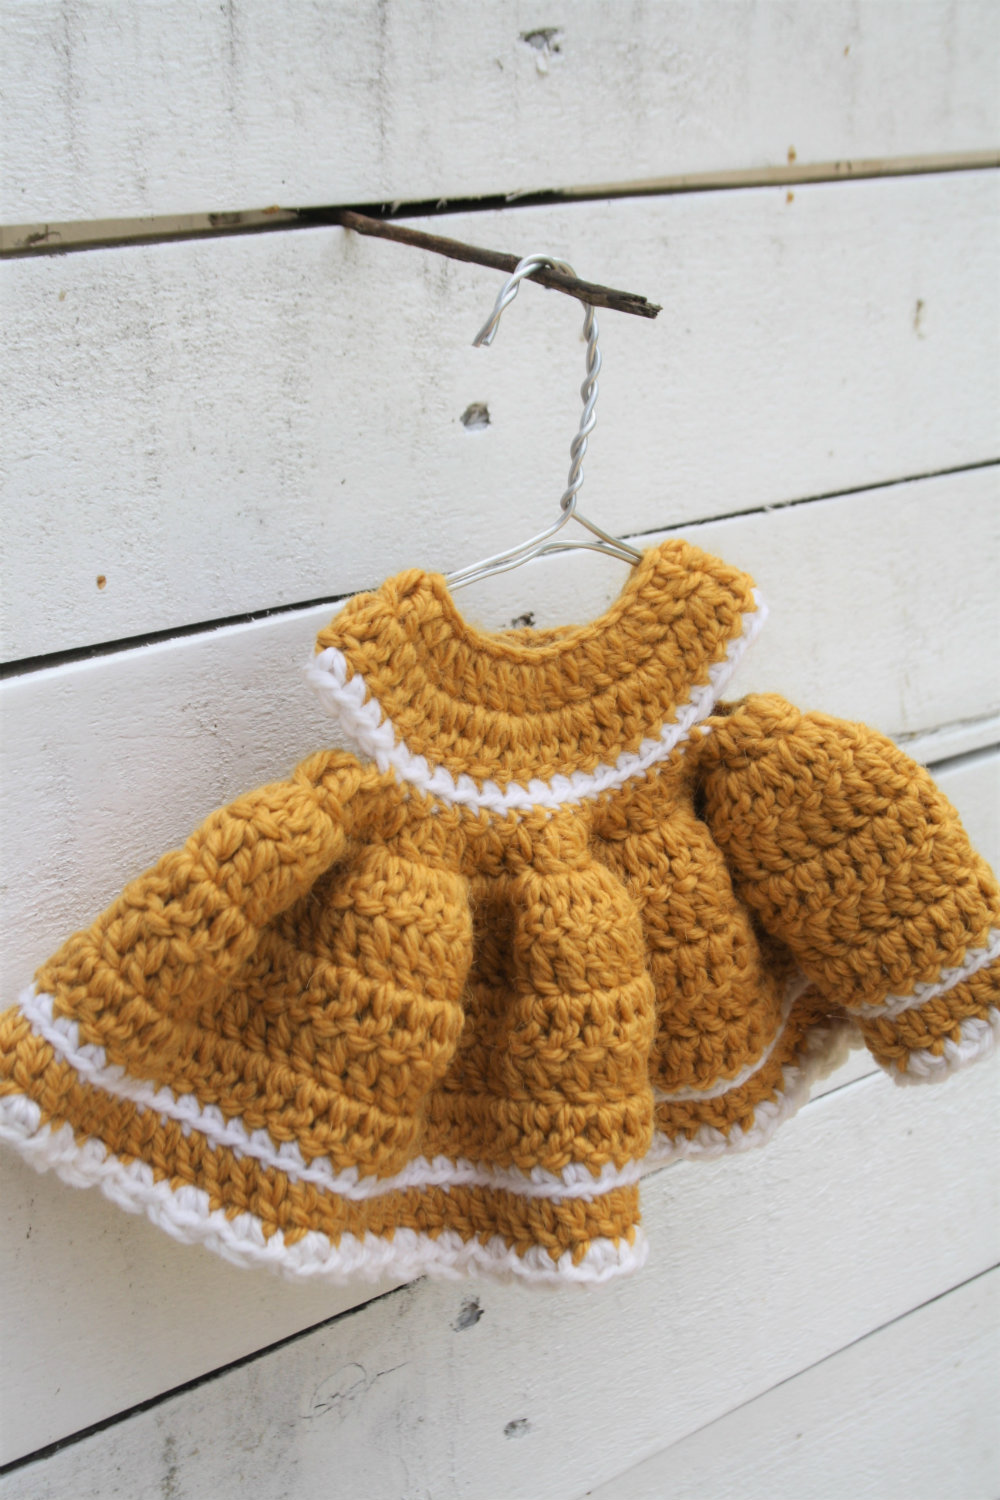 Crochet dress pattern, Crochet dress for amigurumi doll or animal